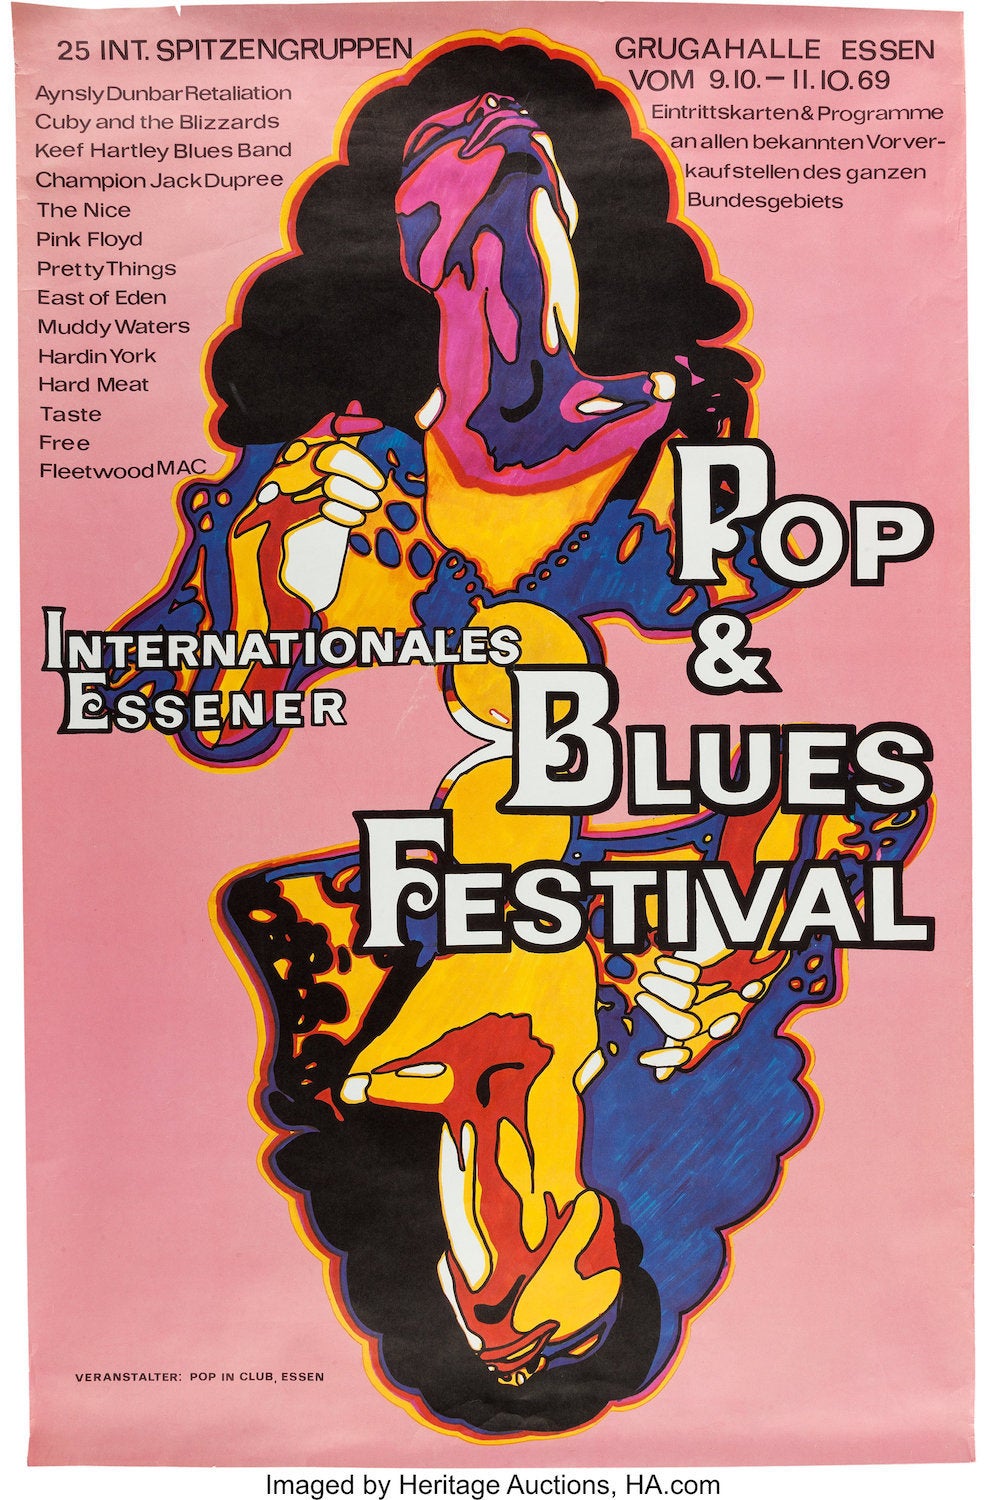 Vintage Music Art  - Fleetwood Mac At Pop & Blues Festival   0819